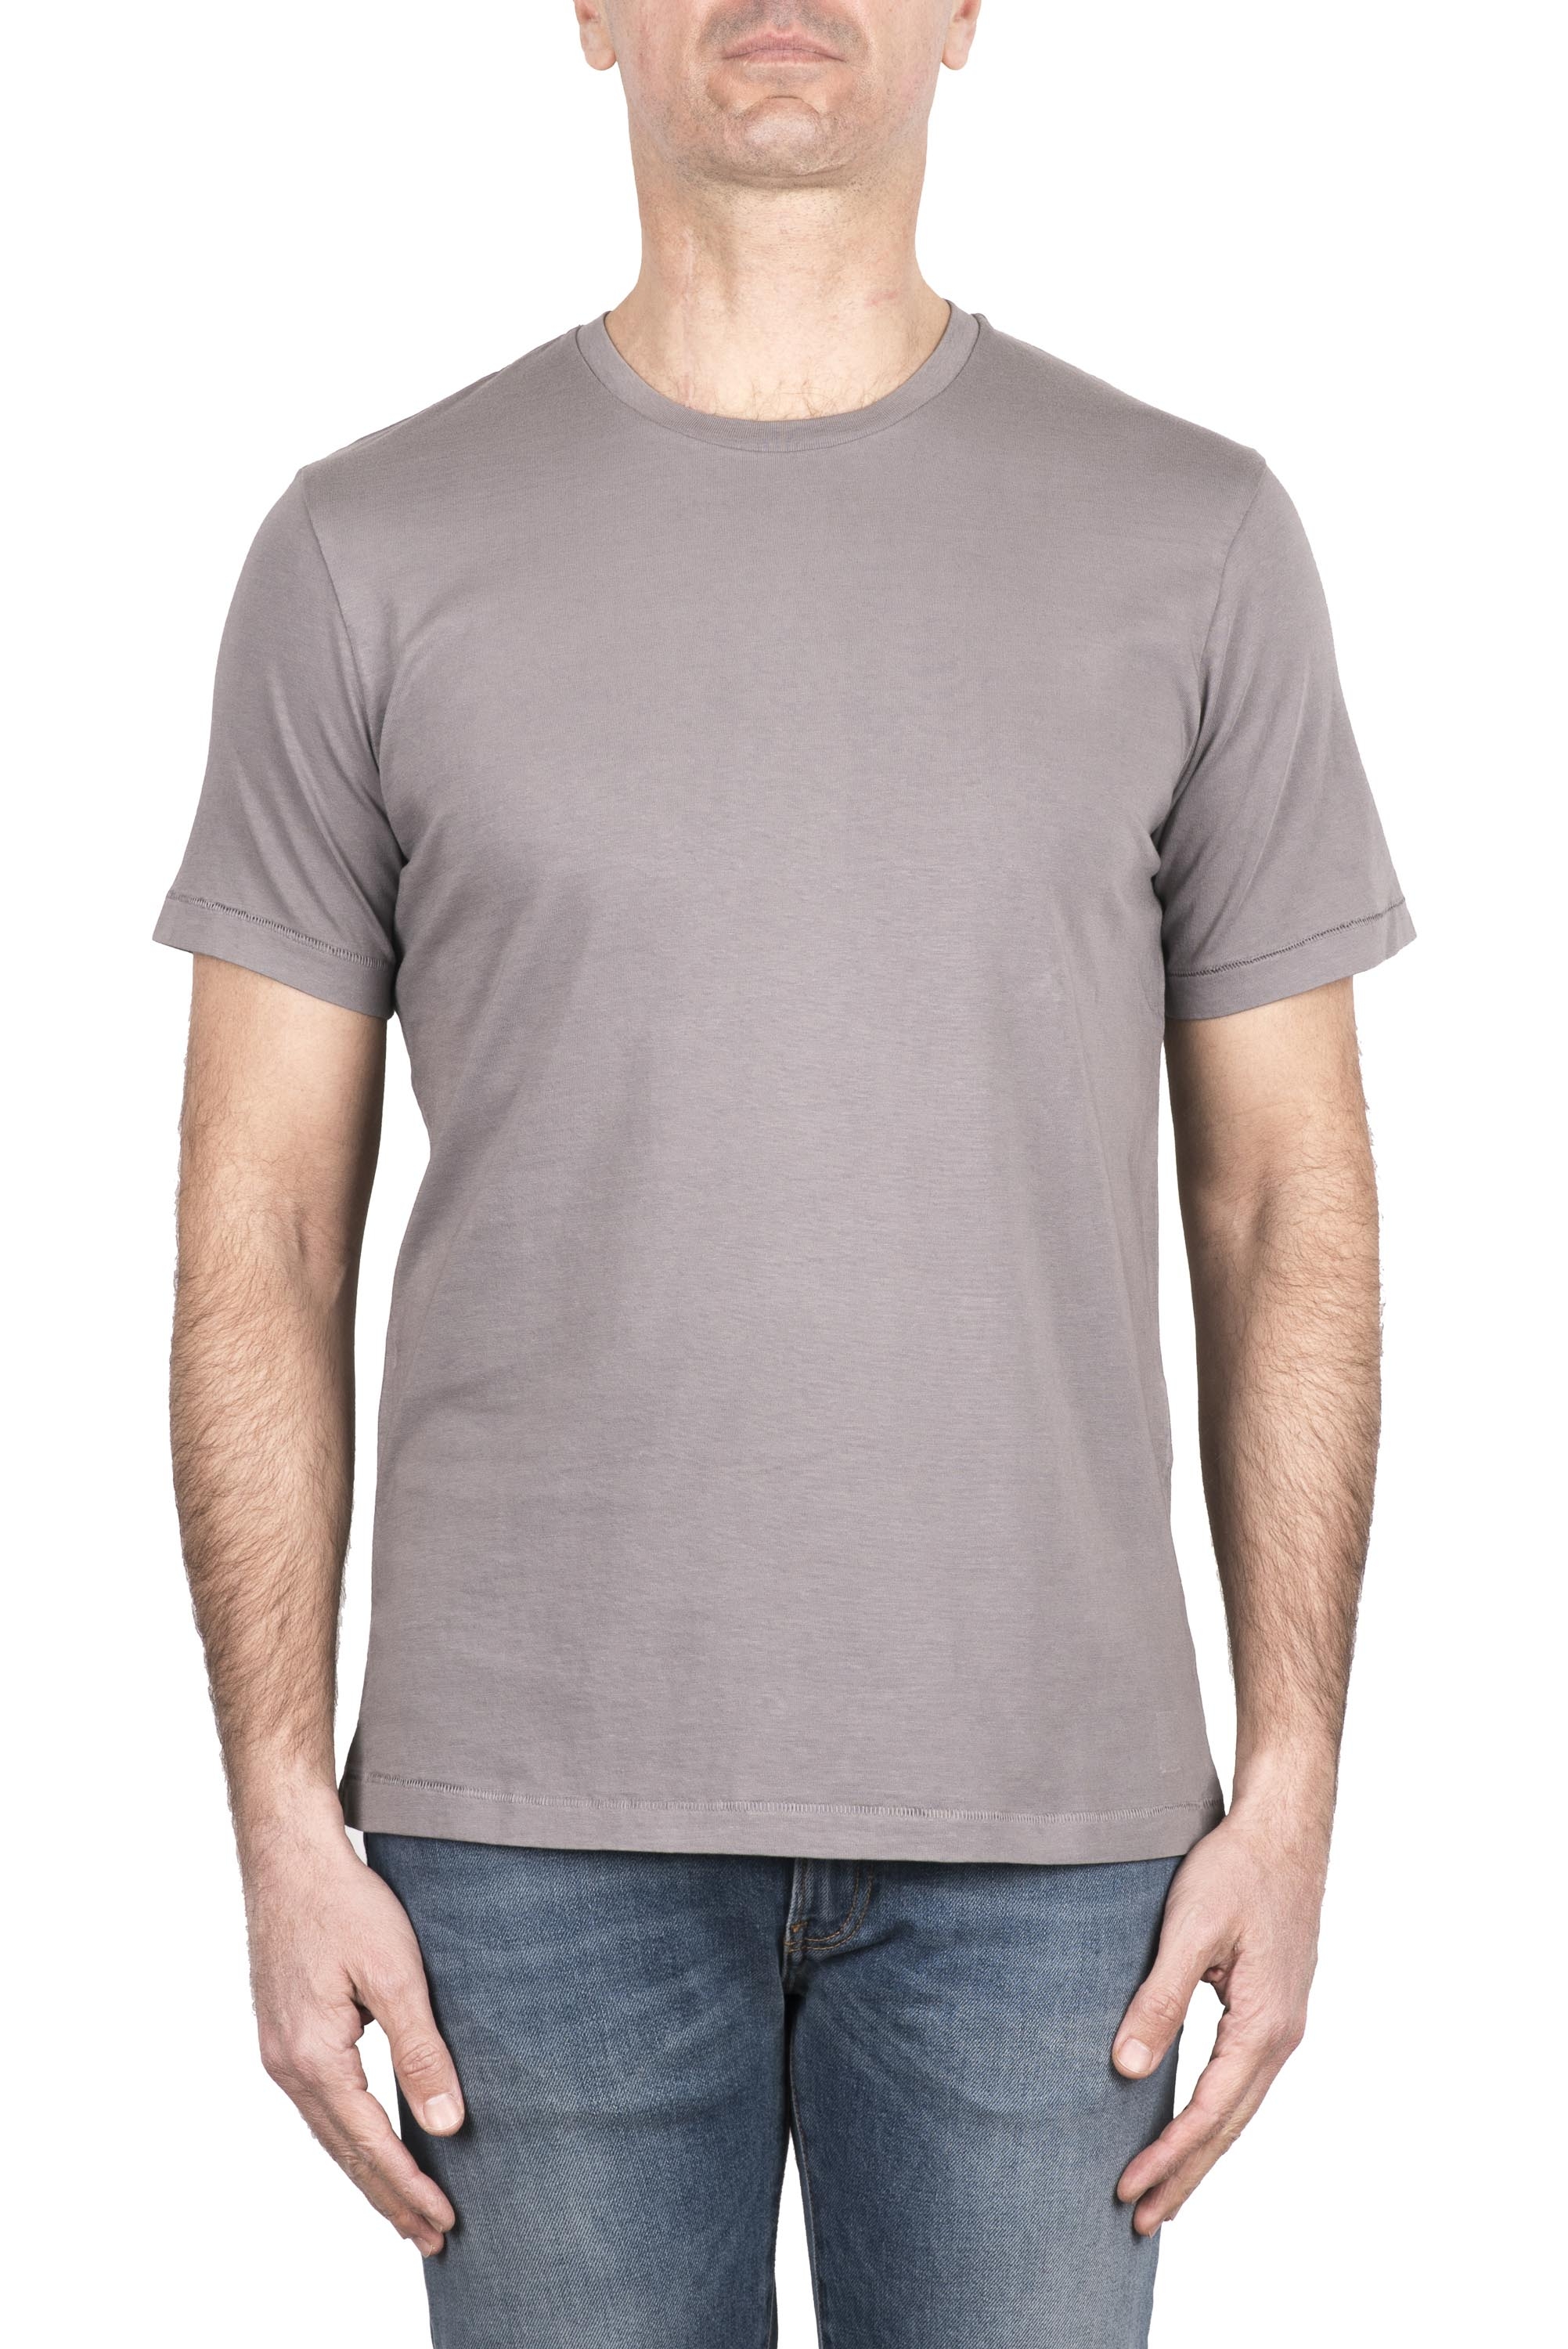 SBU 03327_2021AW Camiseta de algodón puro con cuello redondo gris 01